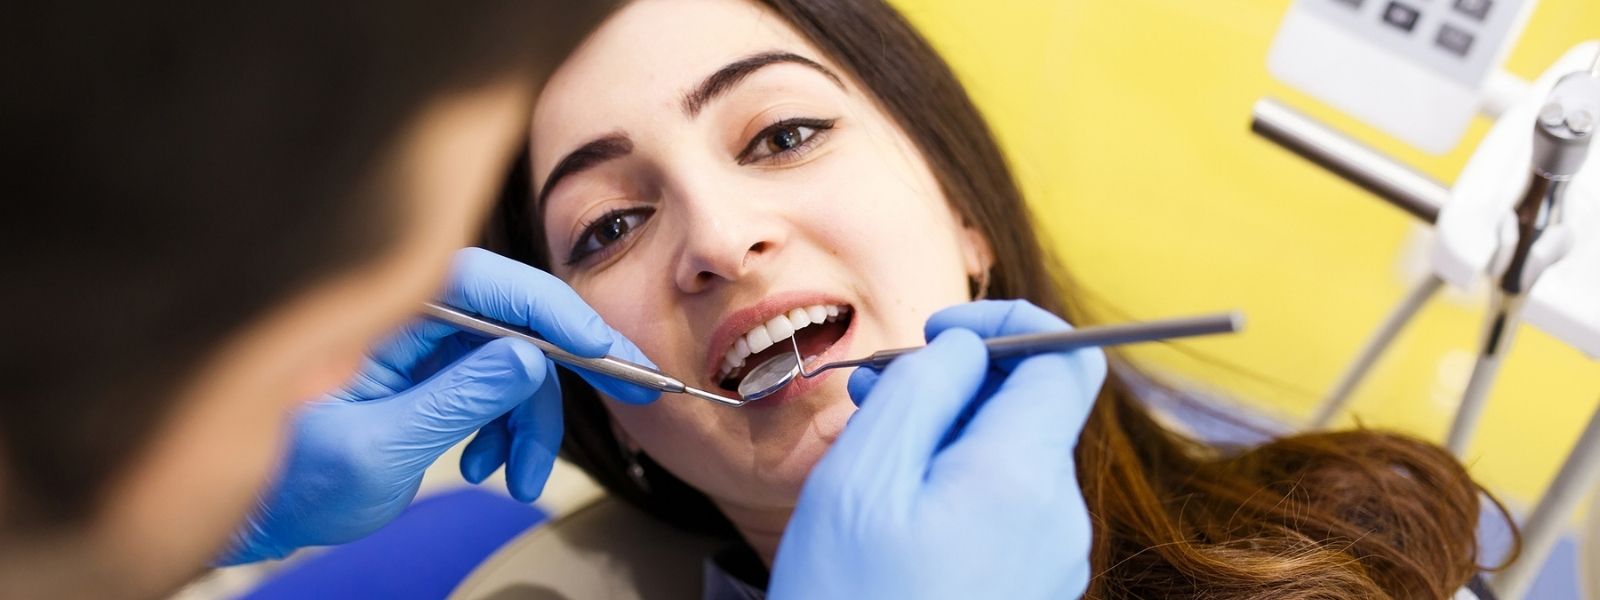 Dental procedure on a female patient.